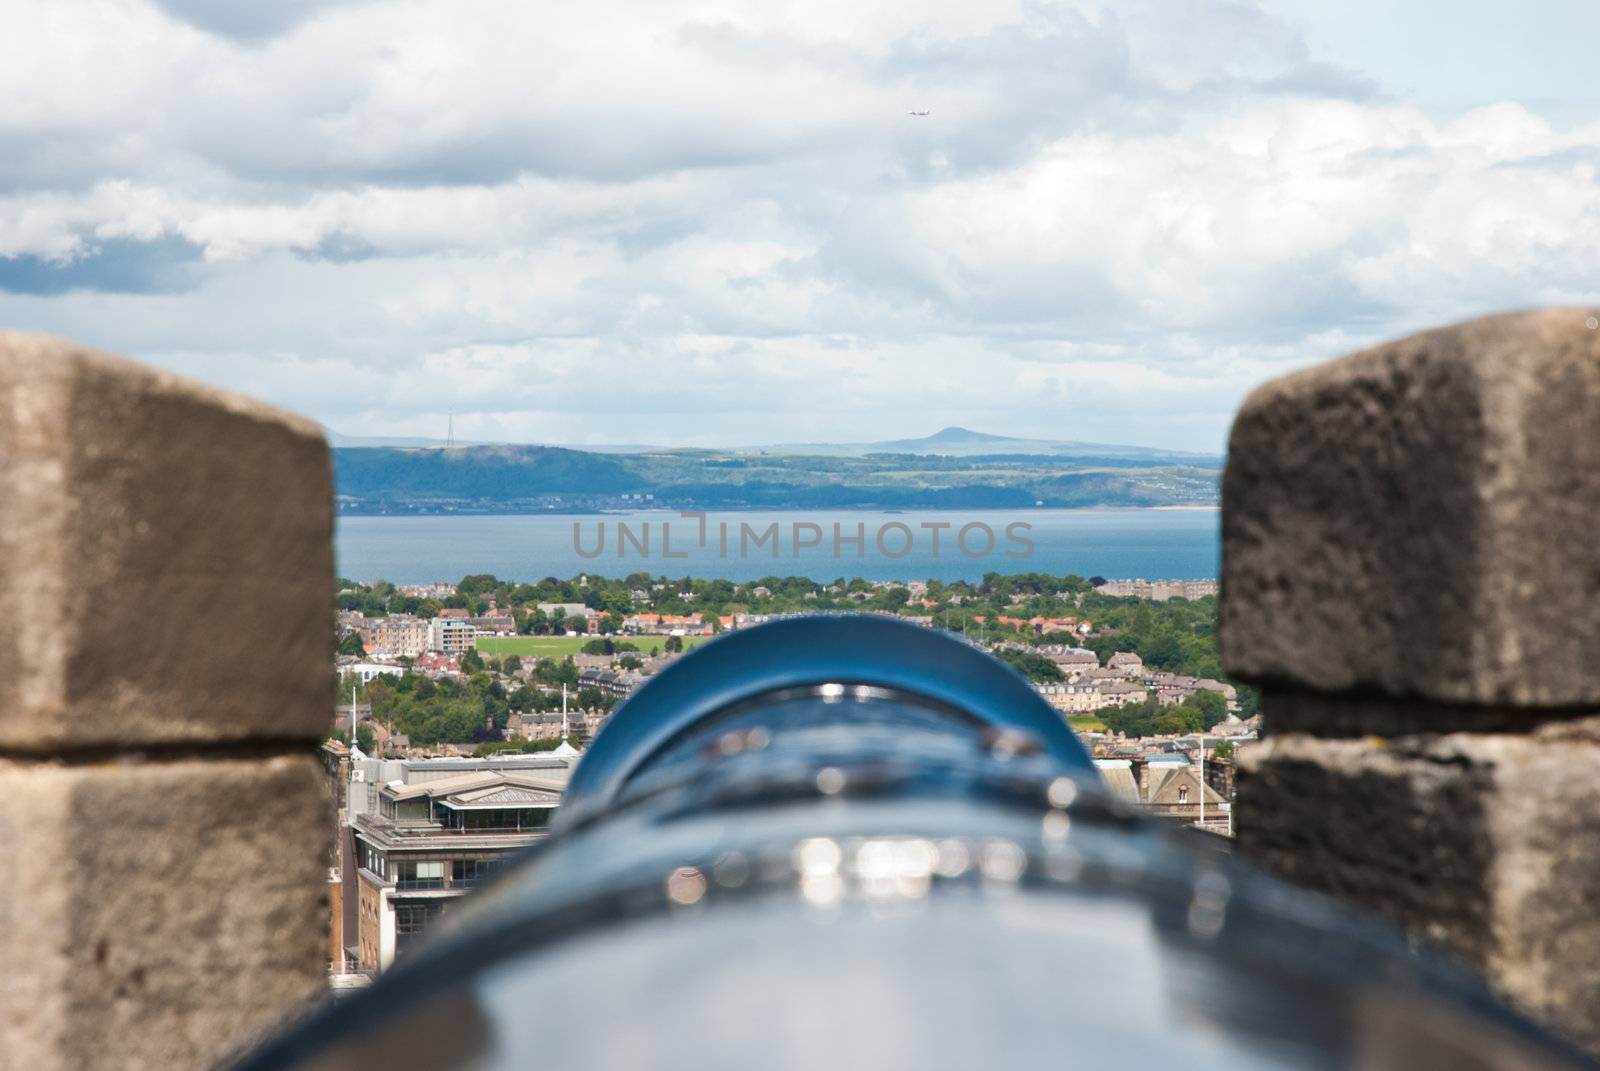 Reportage from Edimburgh, Edimburgh Castle